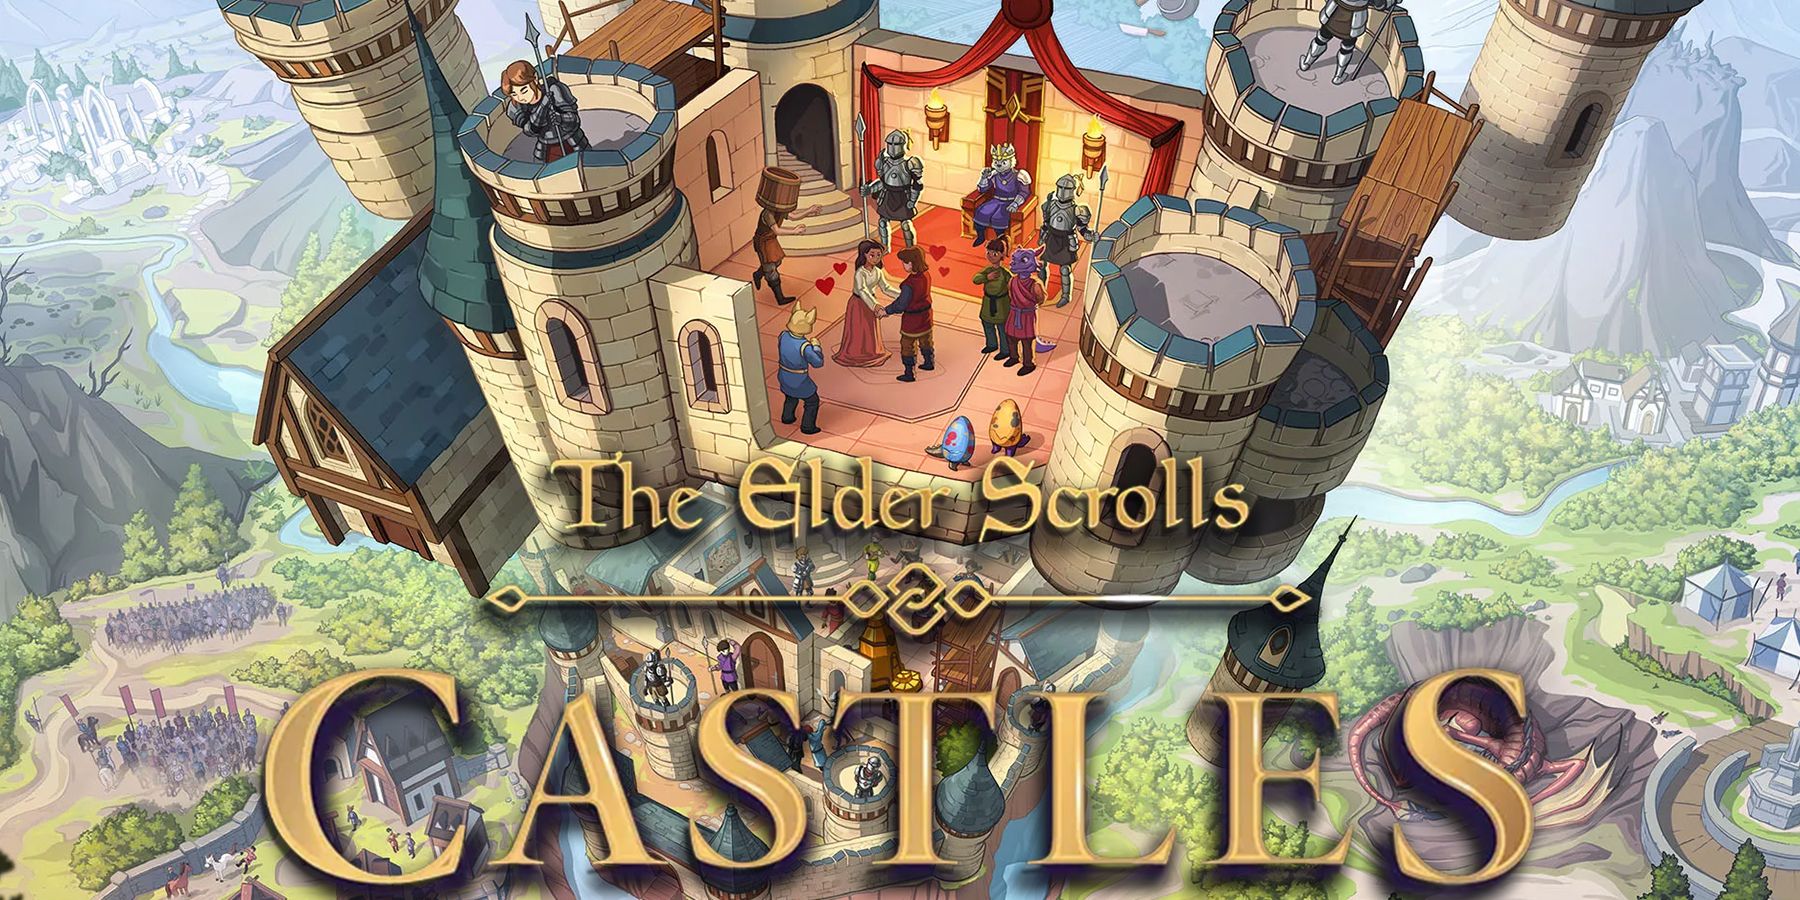 The Elder Scrolls TES Castles key art with game logo composite